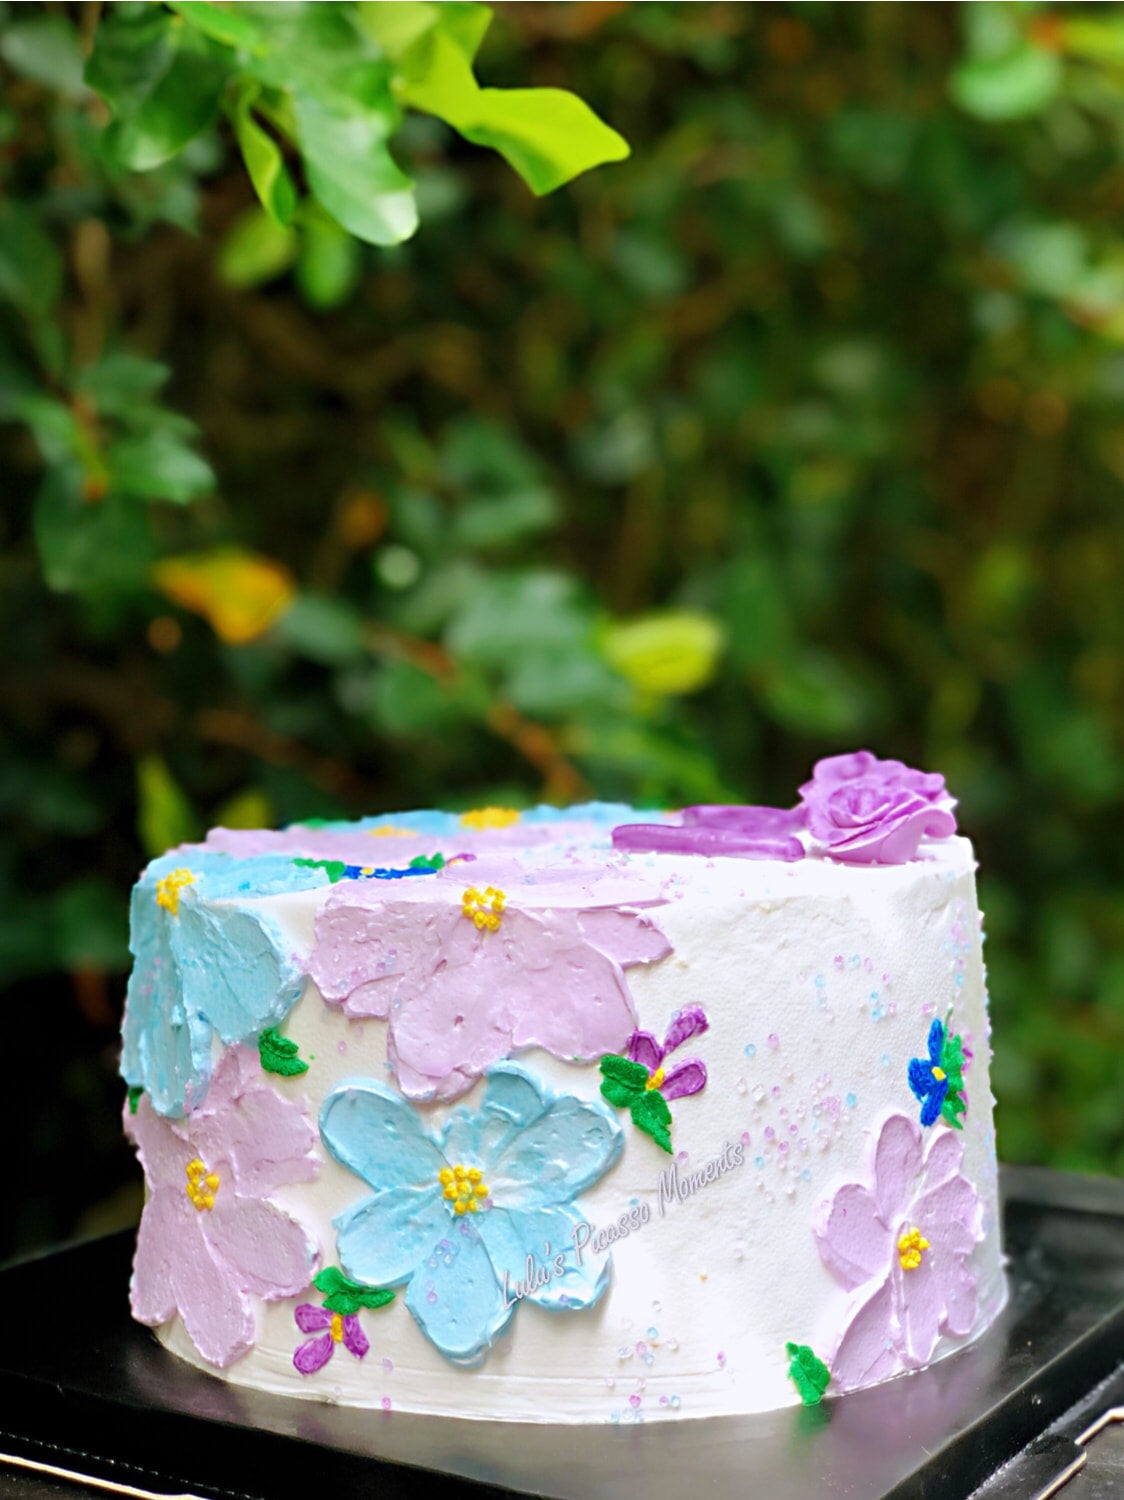 Engagement Cake - Decorated Cake by Artistic Cake Designs - CakesDecor